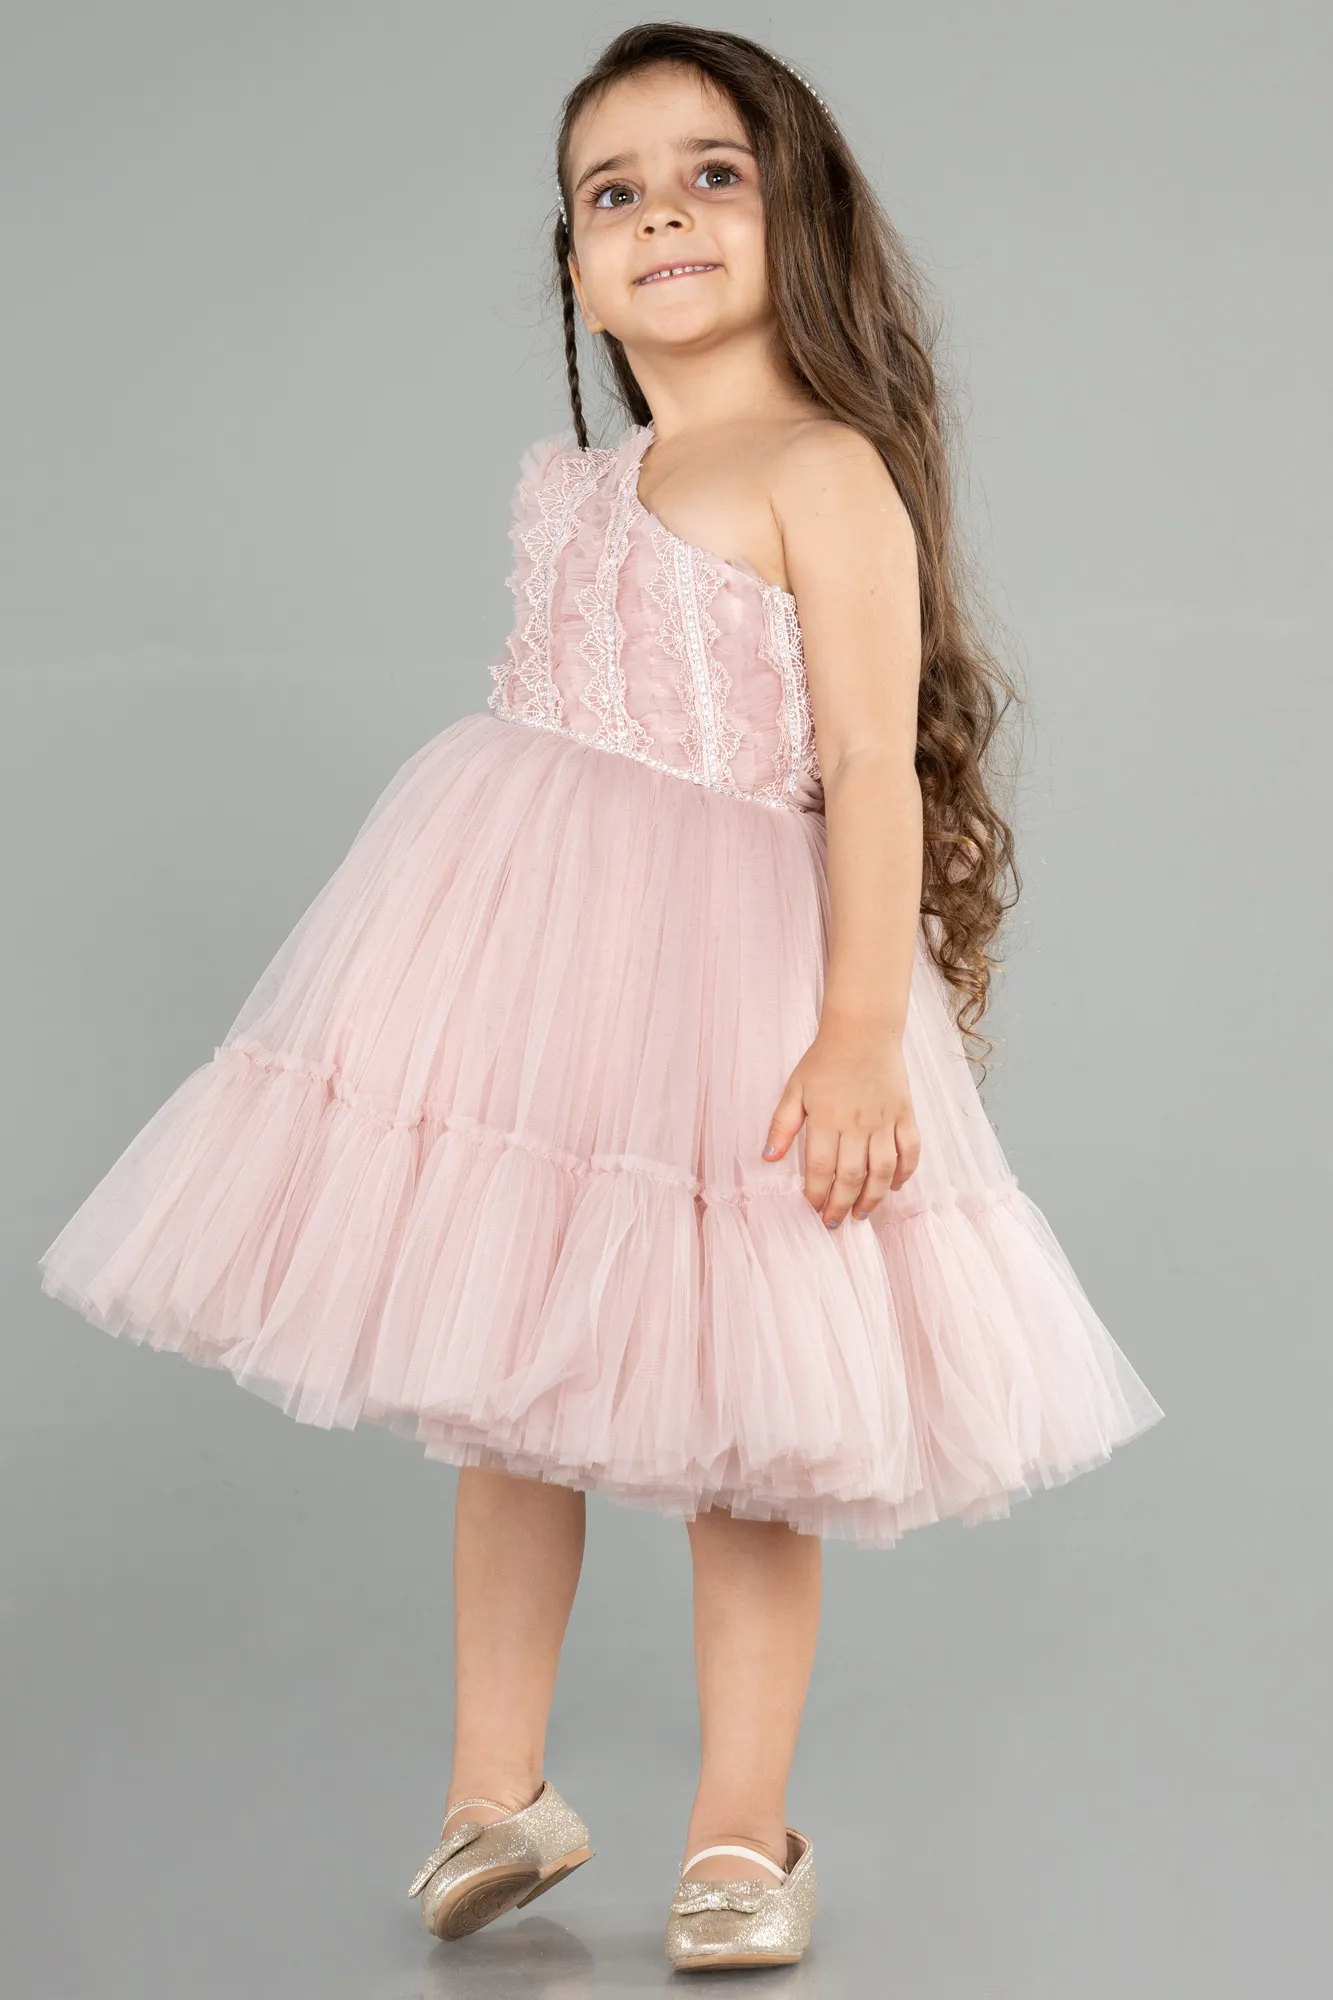 Powder Color-Short Girl Dress ABK1765